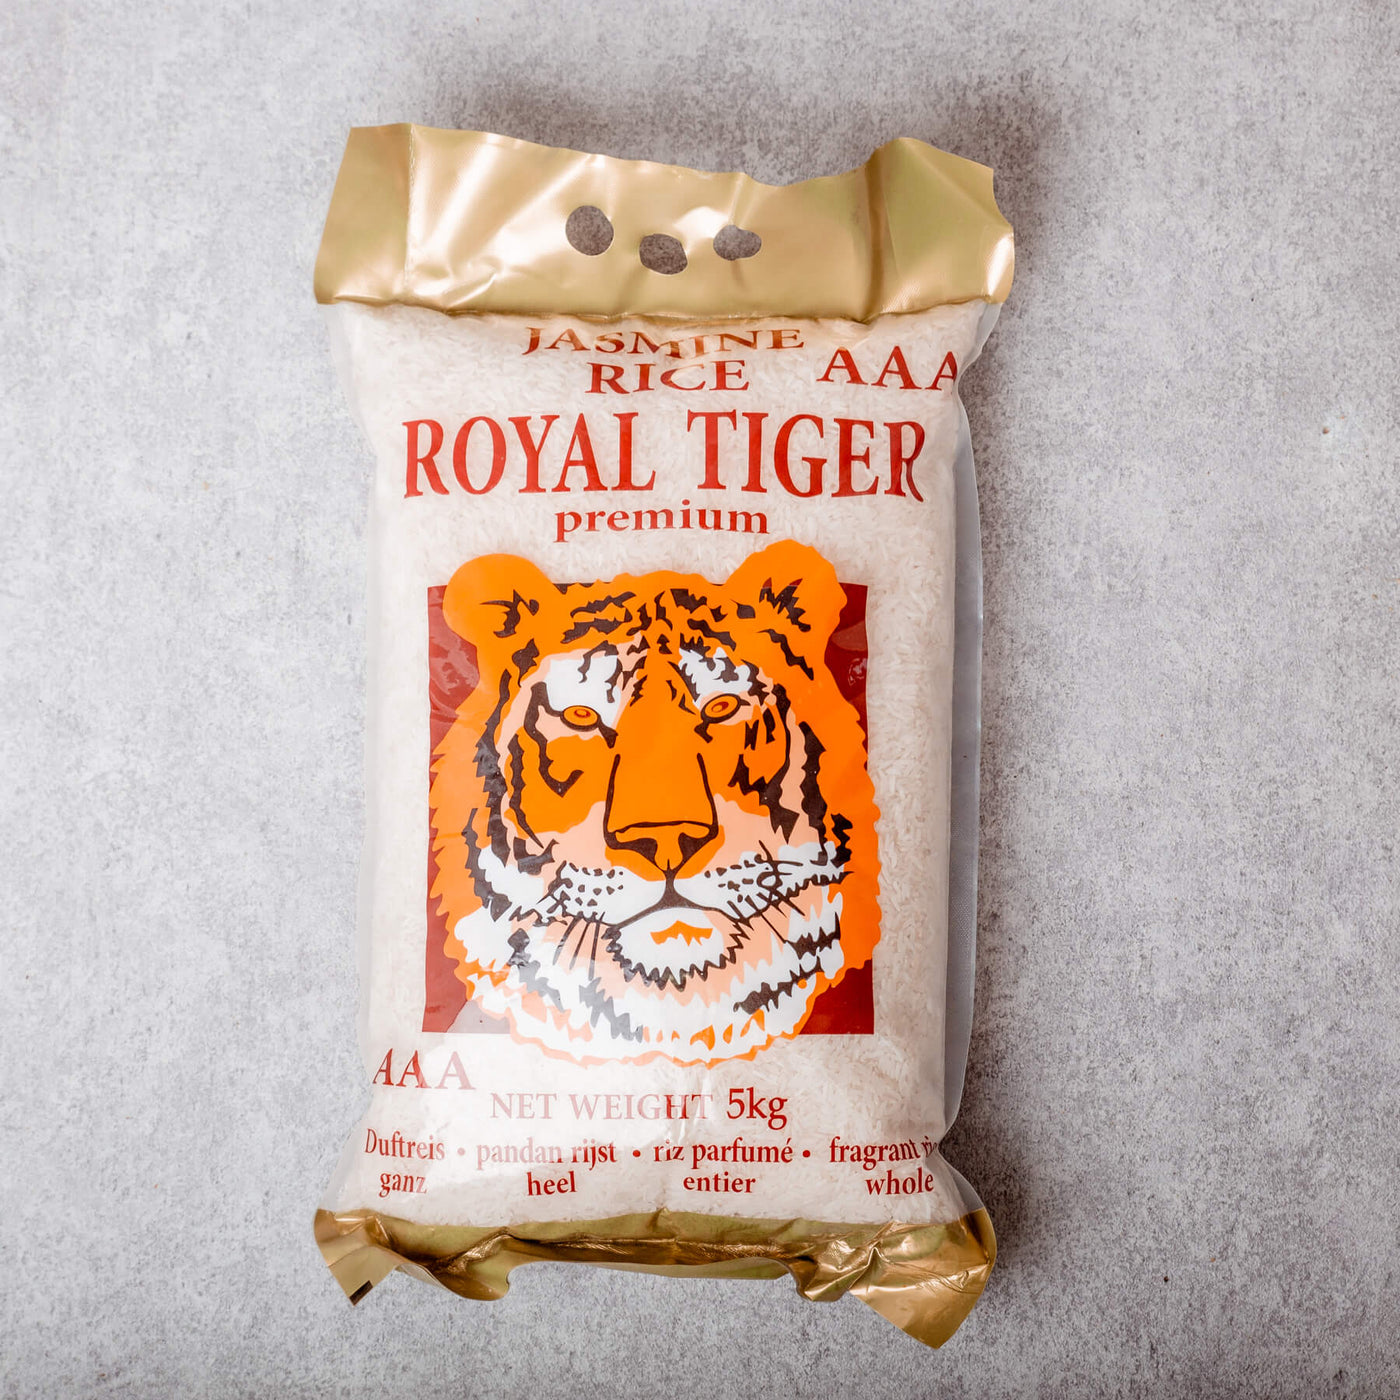 Royal Tiger - Jasmine Rice